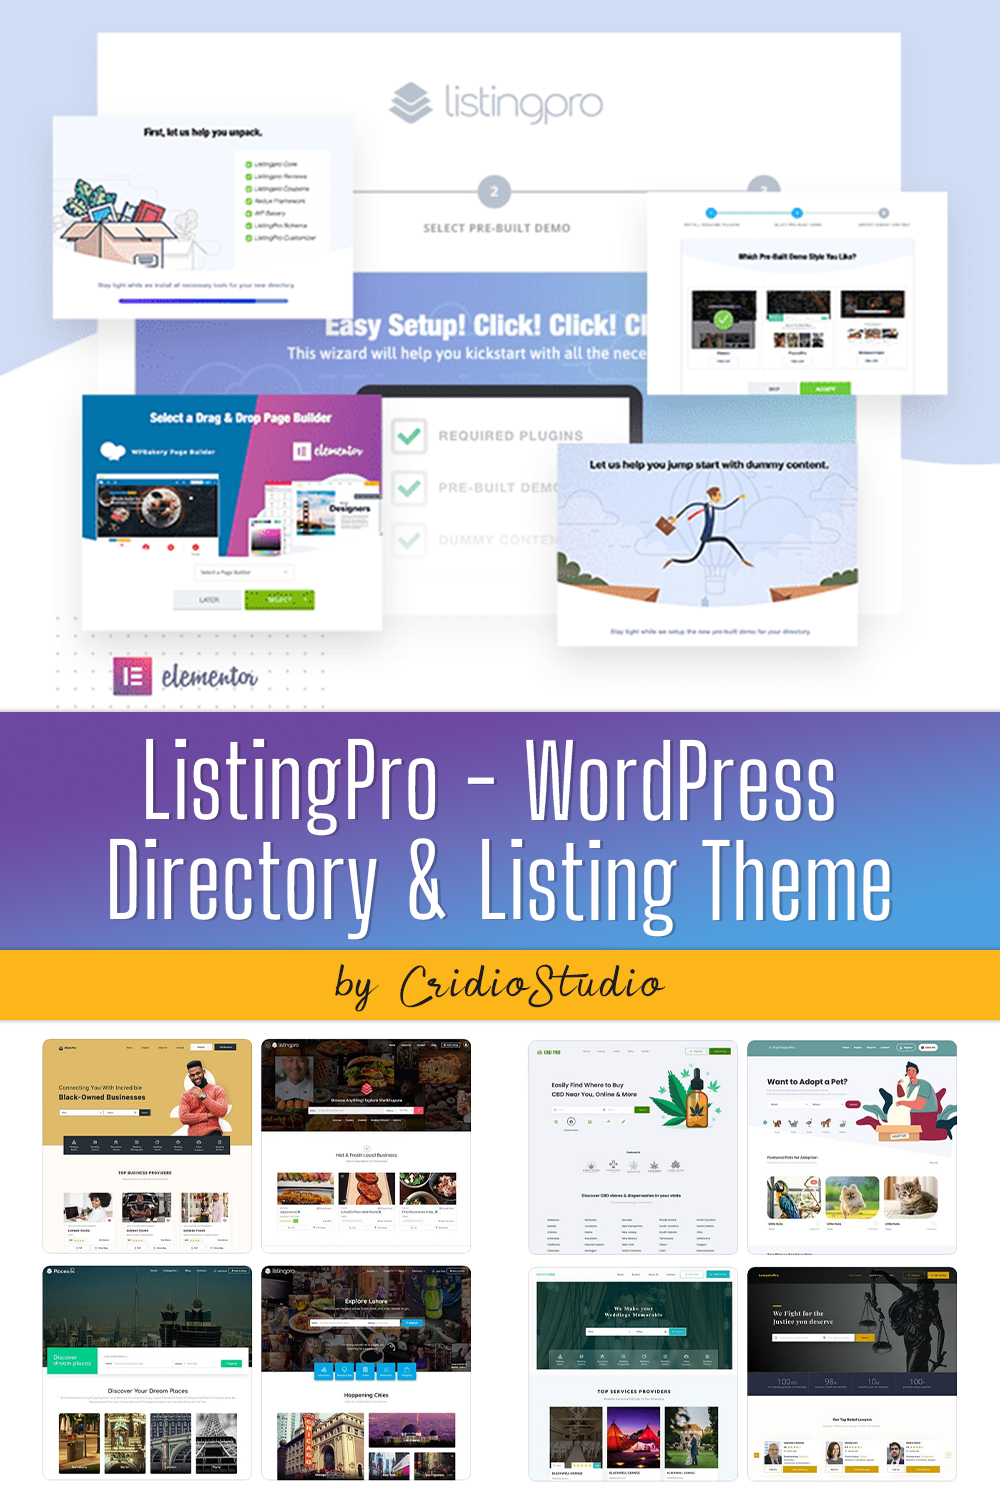 Pinterest illustrations listingpro wordpress directory listing theme.